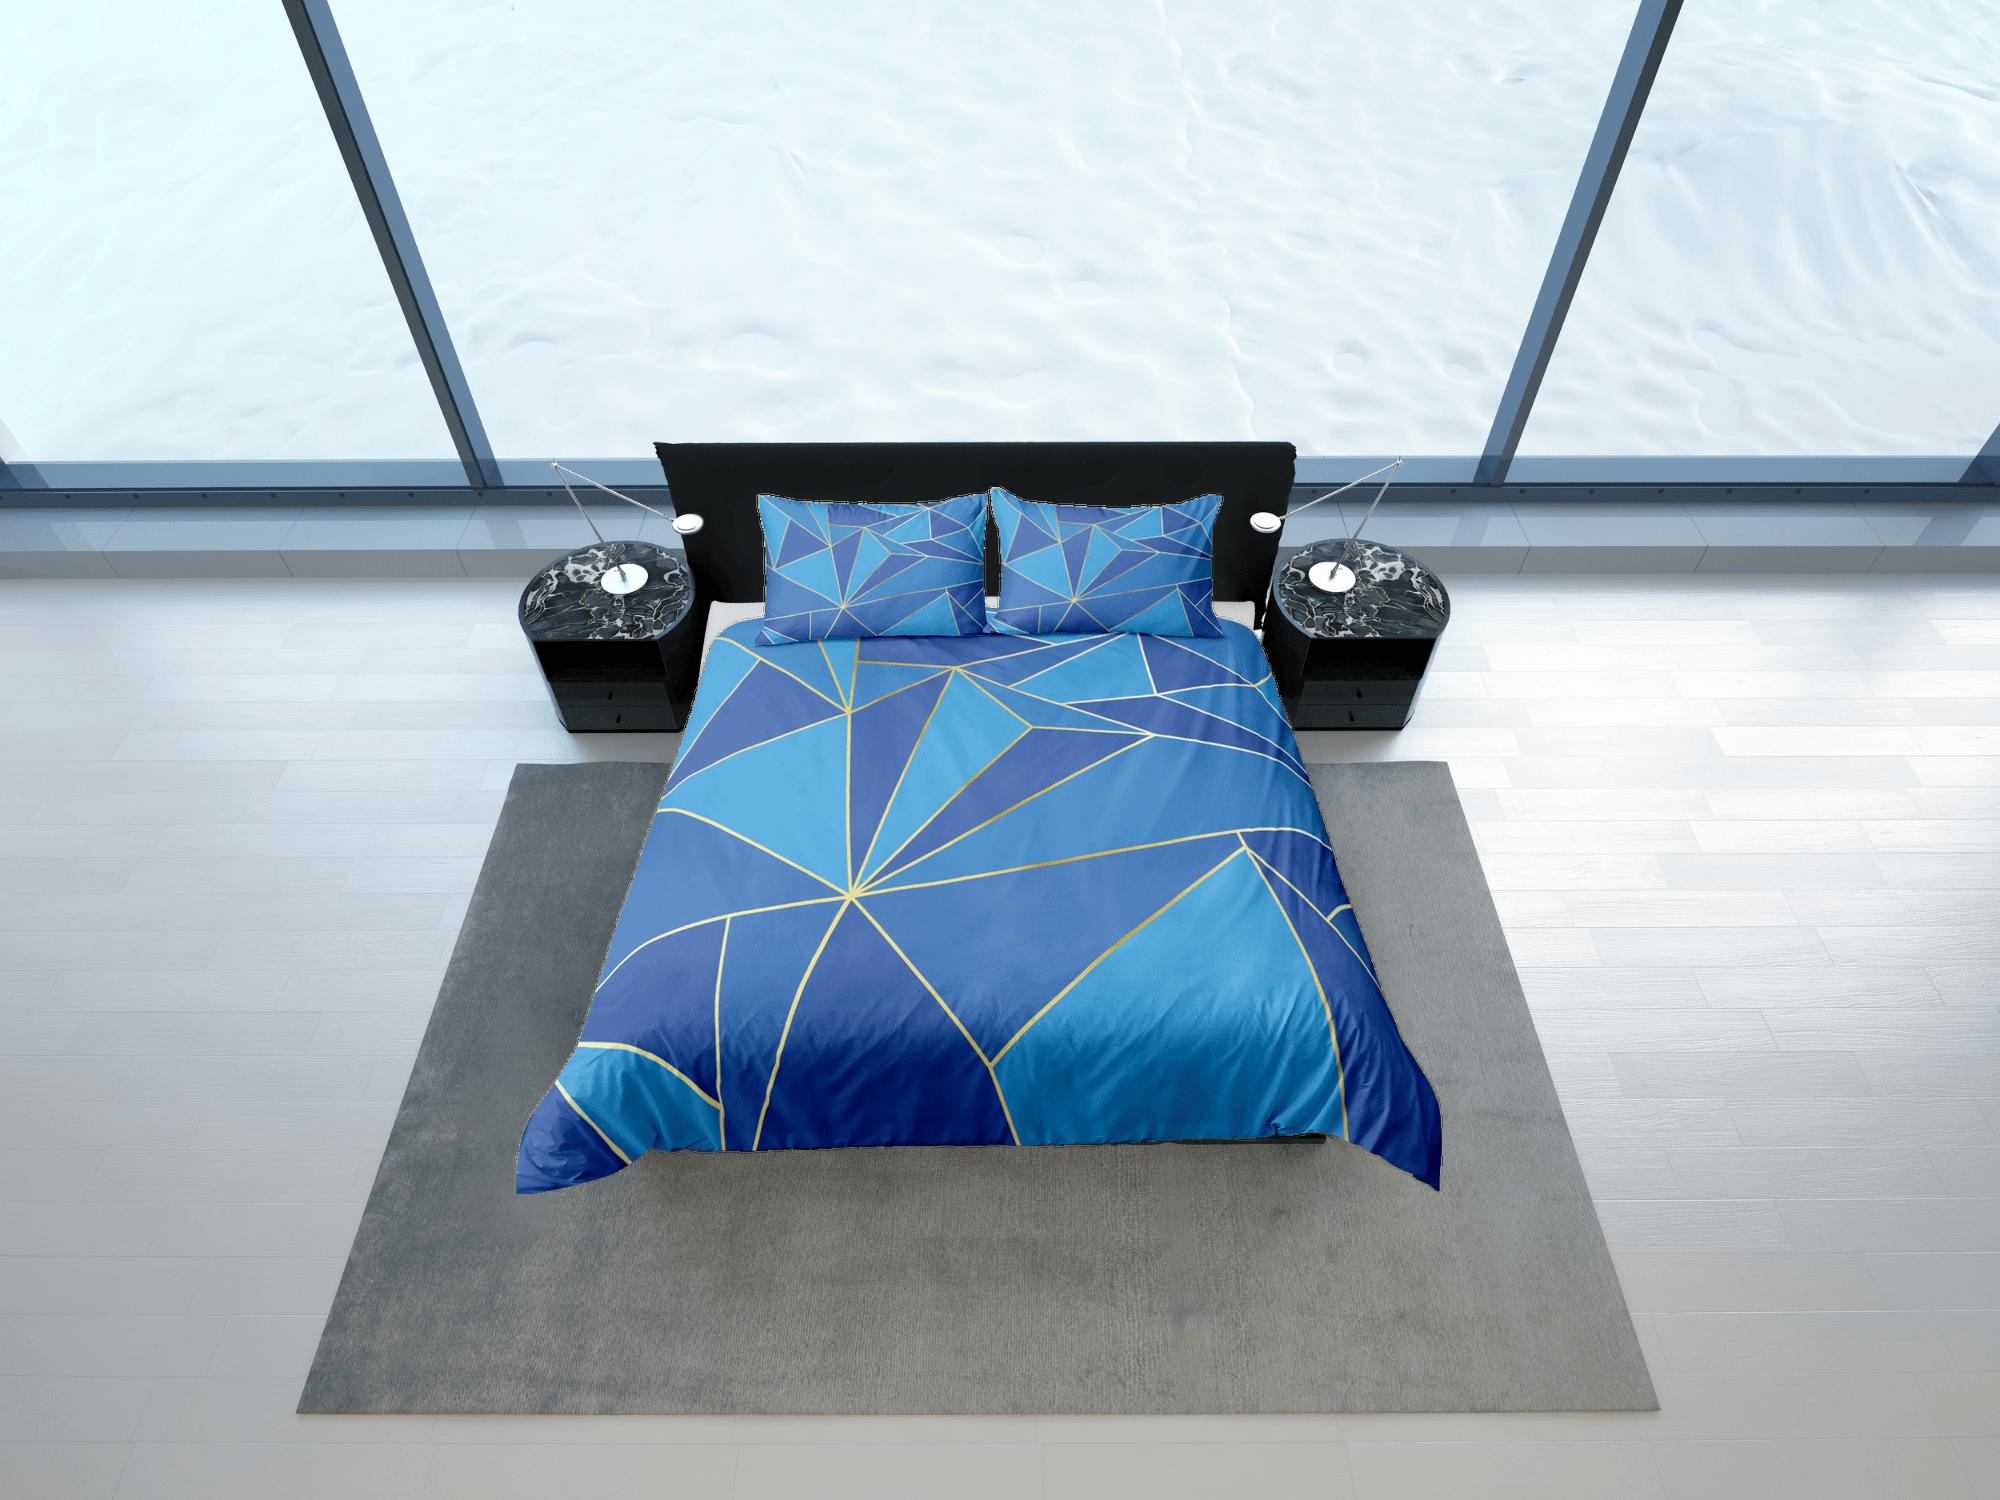 daintyduvet Blue Geometric Bedding Set Luxury Duvet Cover, Aesthetic Zipper Bedding, Printed Doona Cover, California King, Queen, Full, Twin, Crib